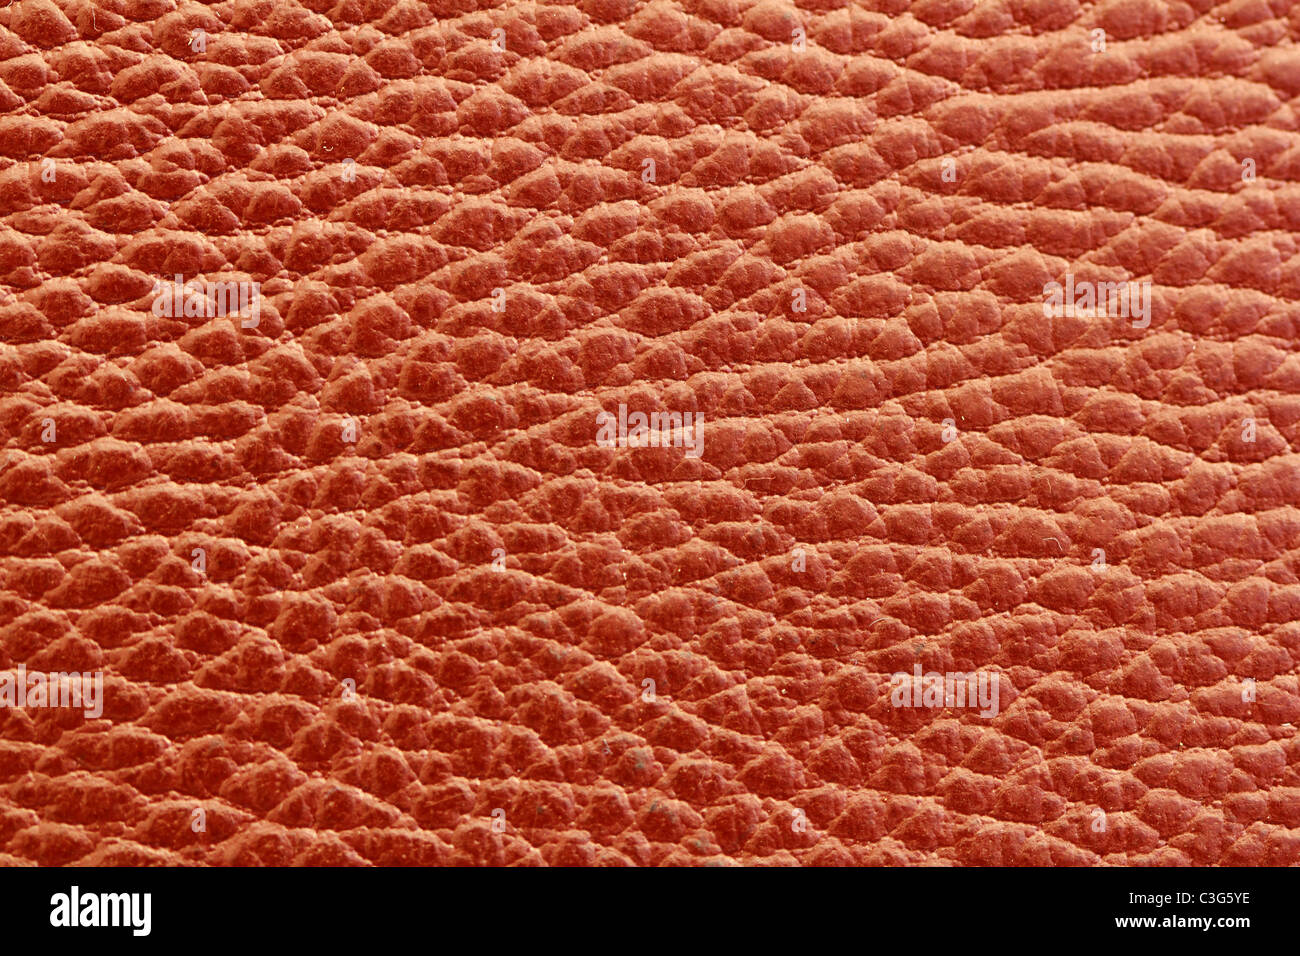 brown leather texture macro closeup detail Stock Photo